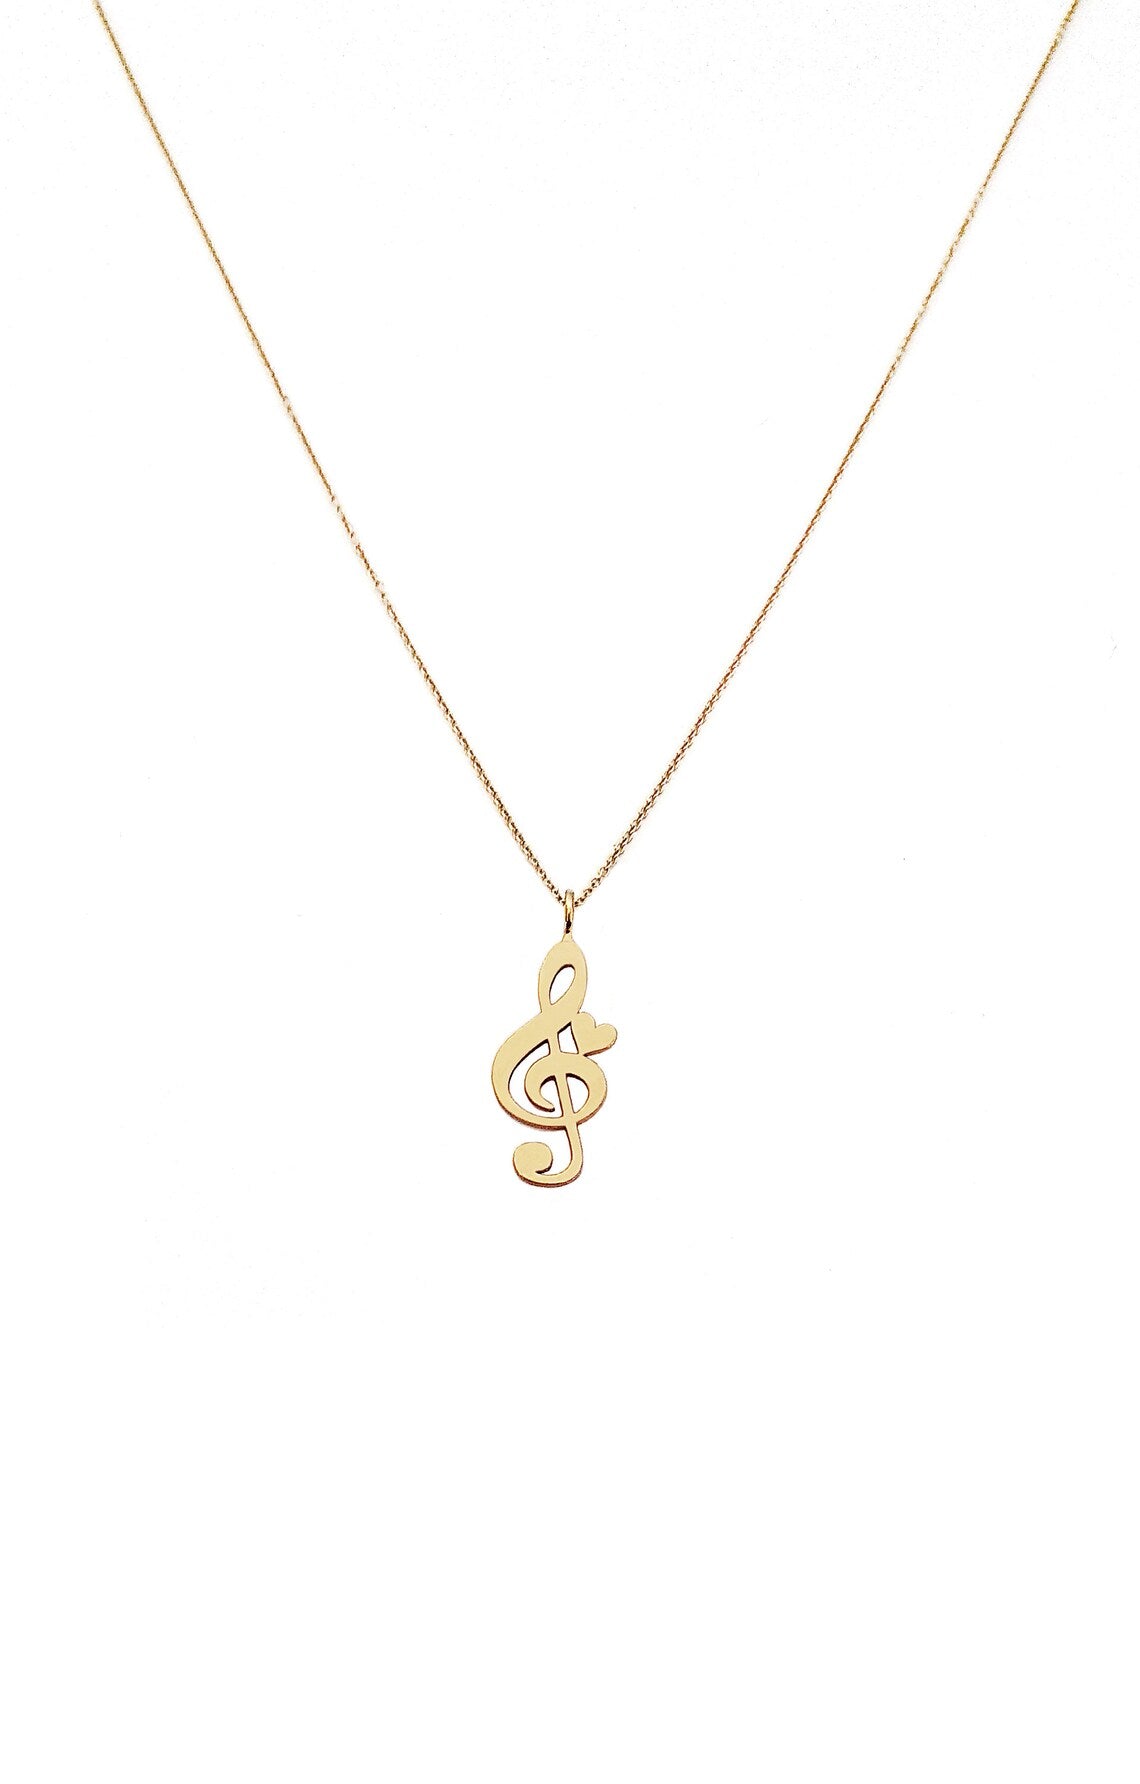 Music Note Necklace- 14k Gold Vermeil Musicians Pendants - Pendant For Music Lovers